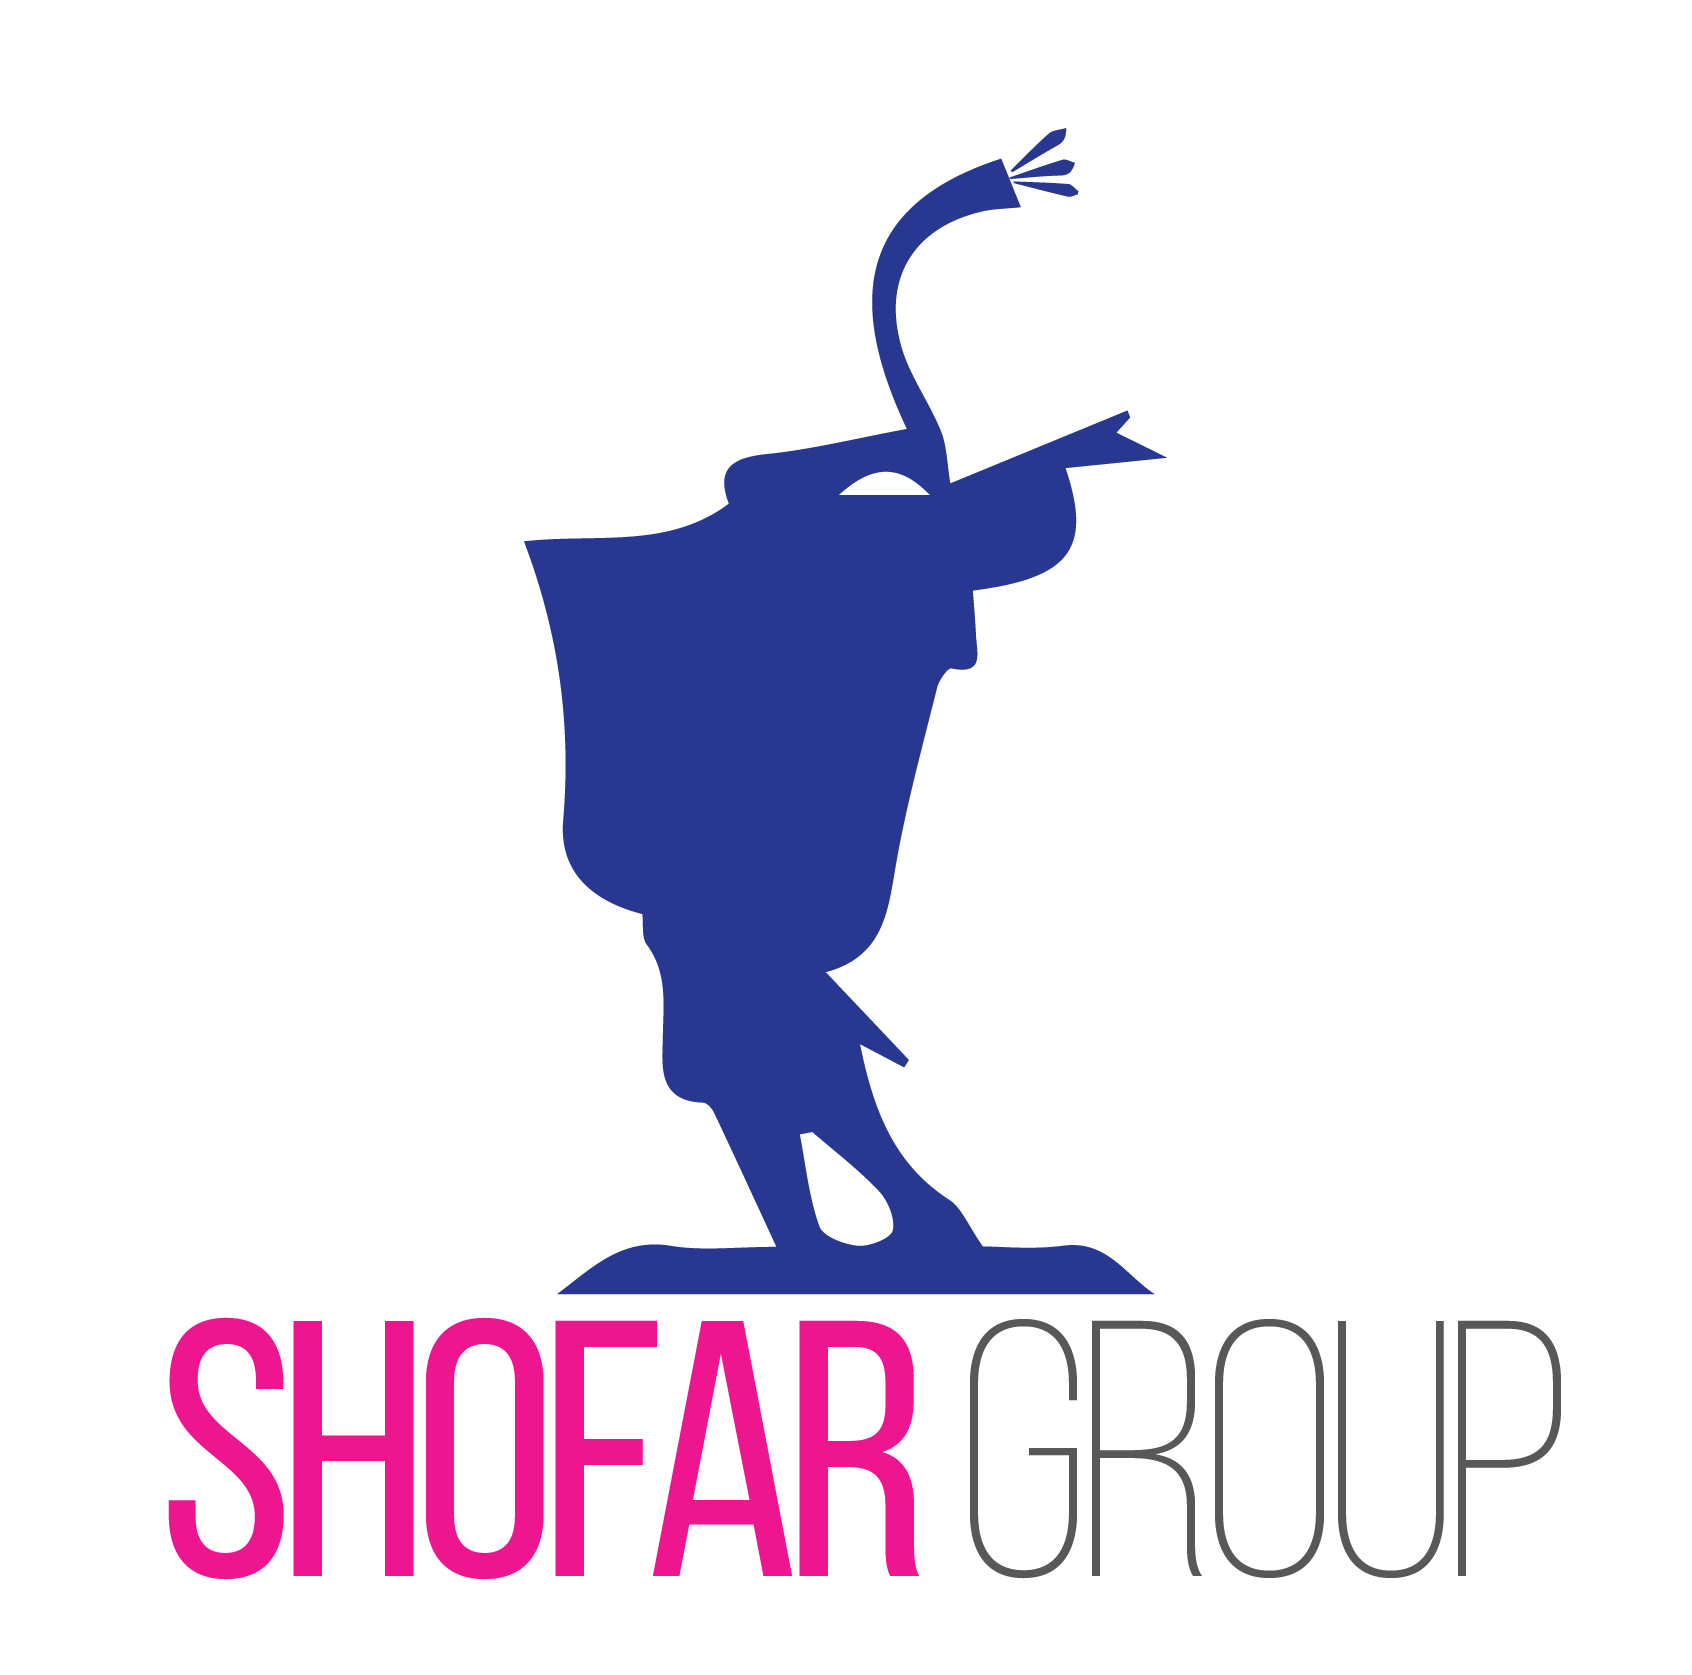 The Shofar Group